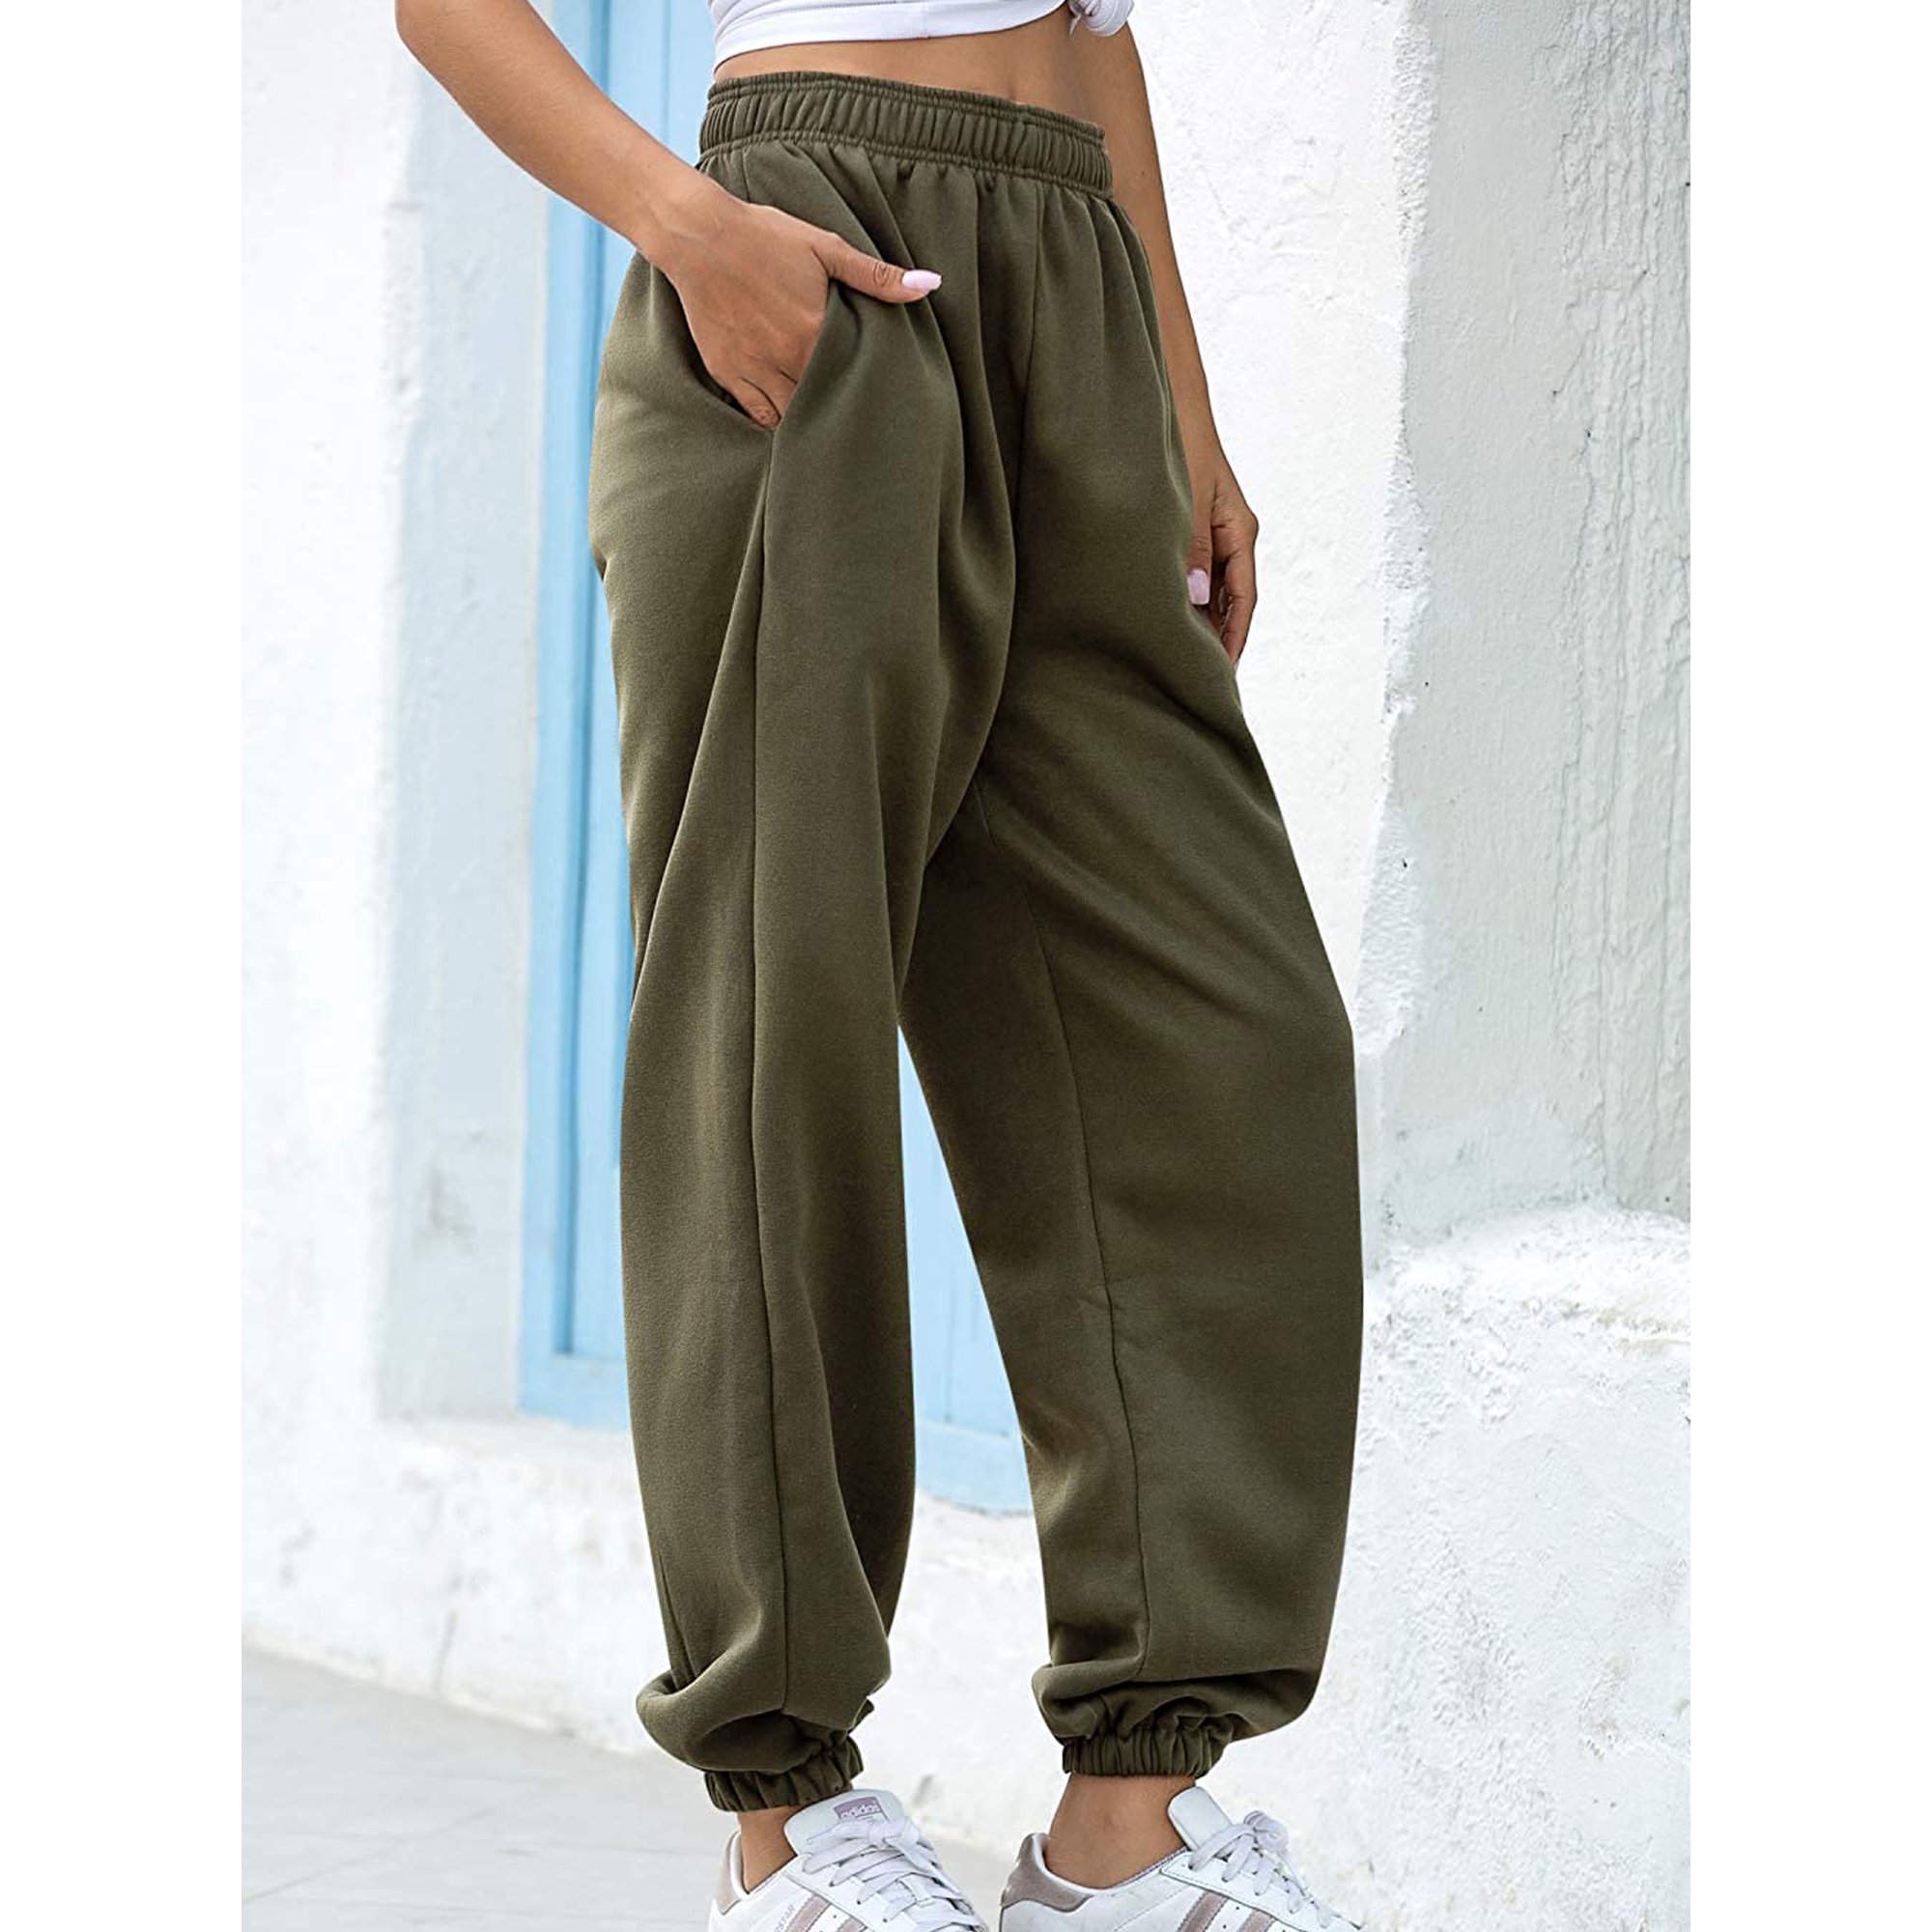 Xingqing Women Ladies Gym Sport Jogger Harem Pants Sweatpants Loose Pants Baggy Trousers Green S - image 4 of 5